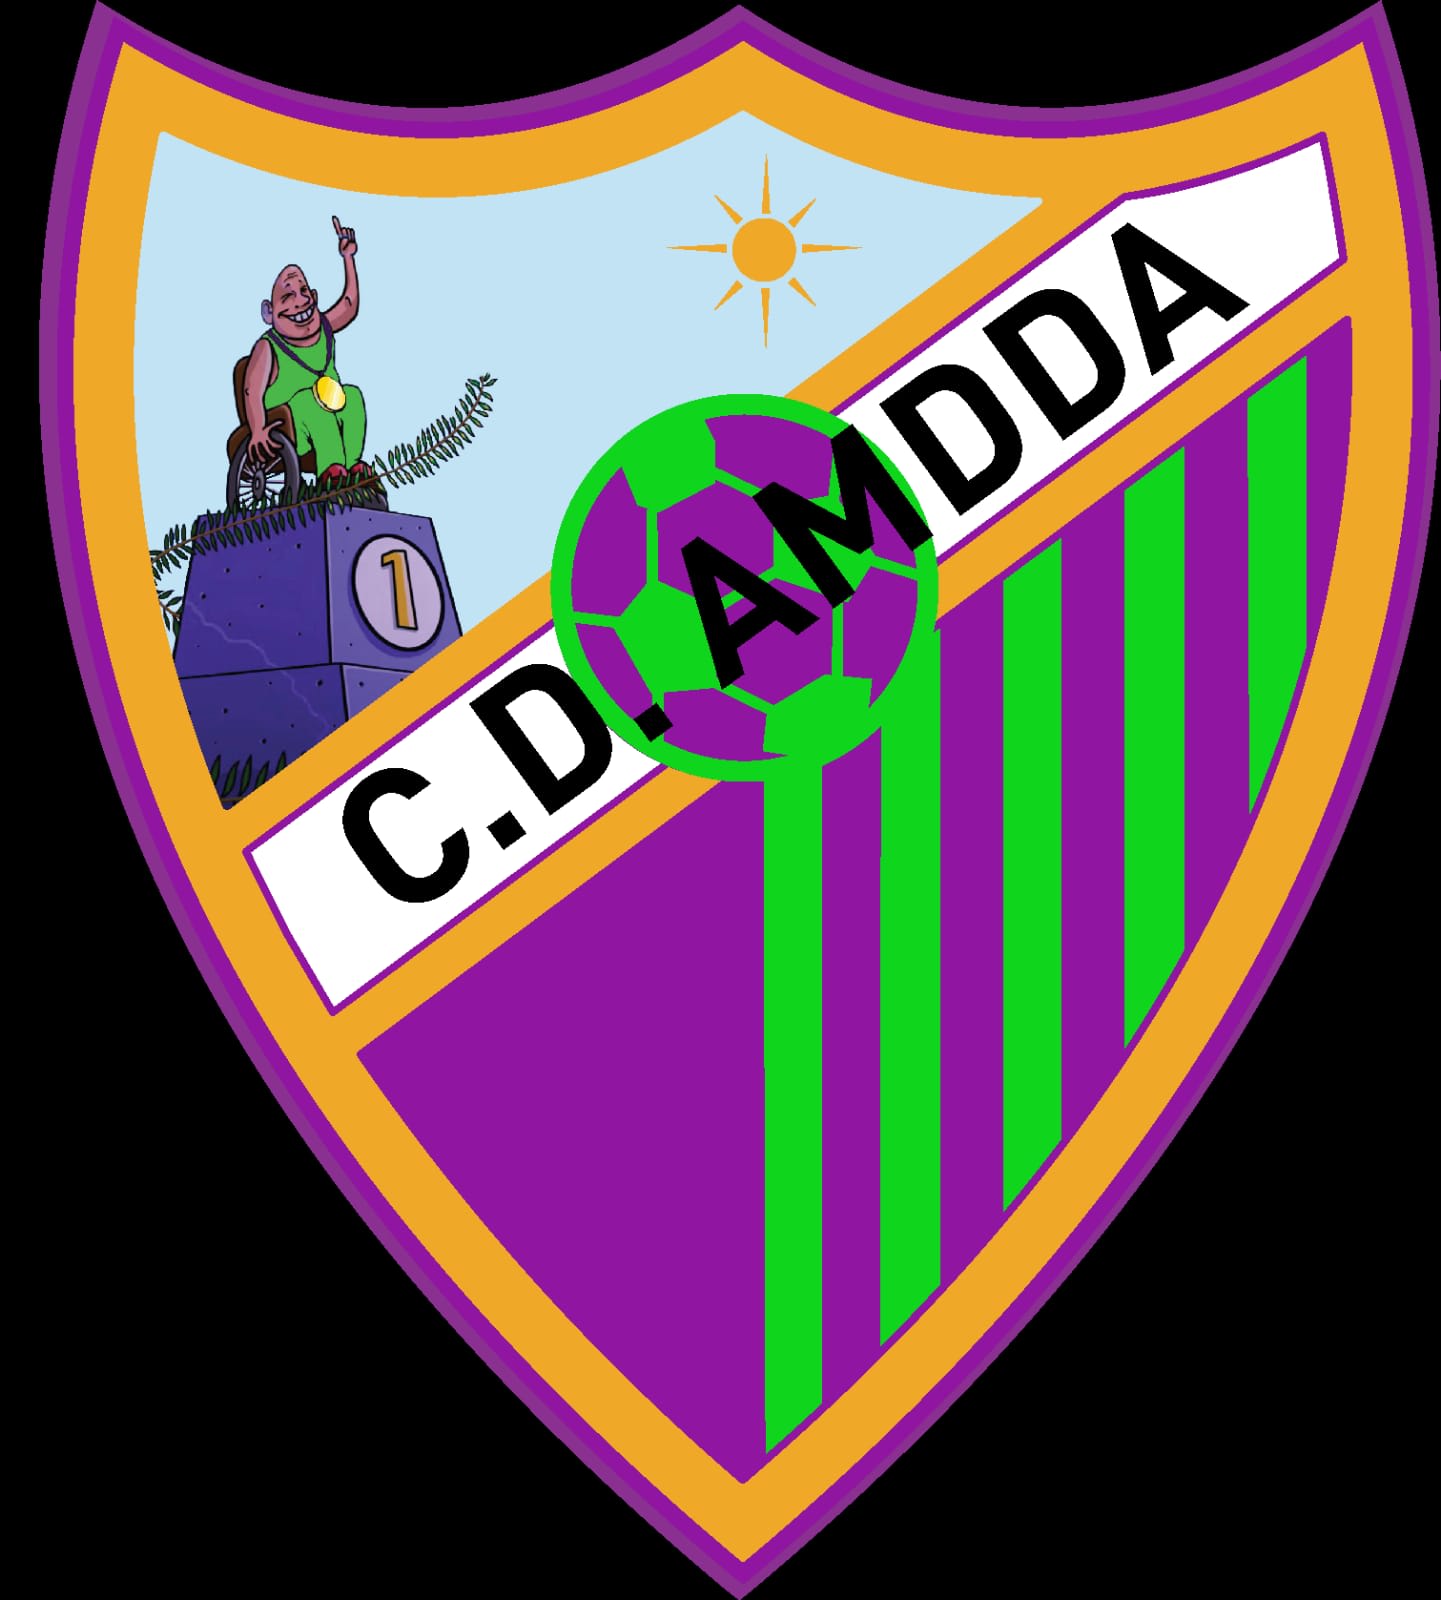 Club Deportivo Amdda